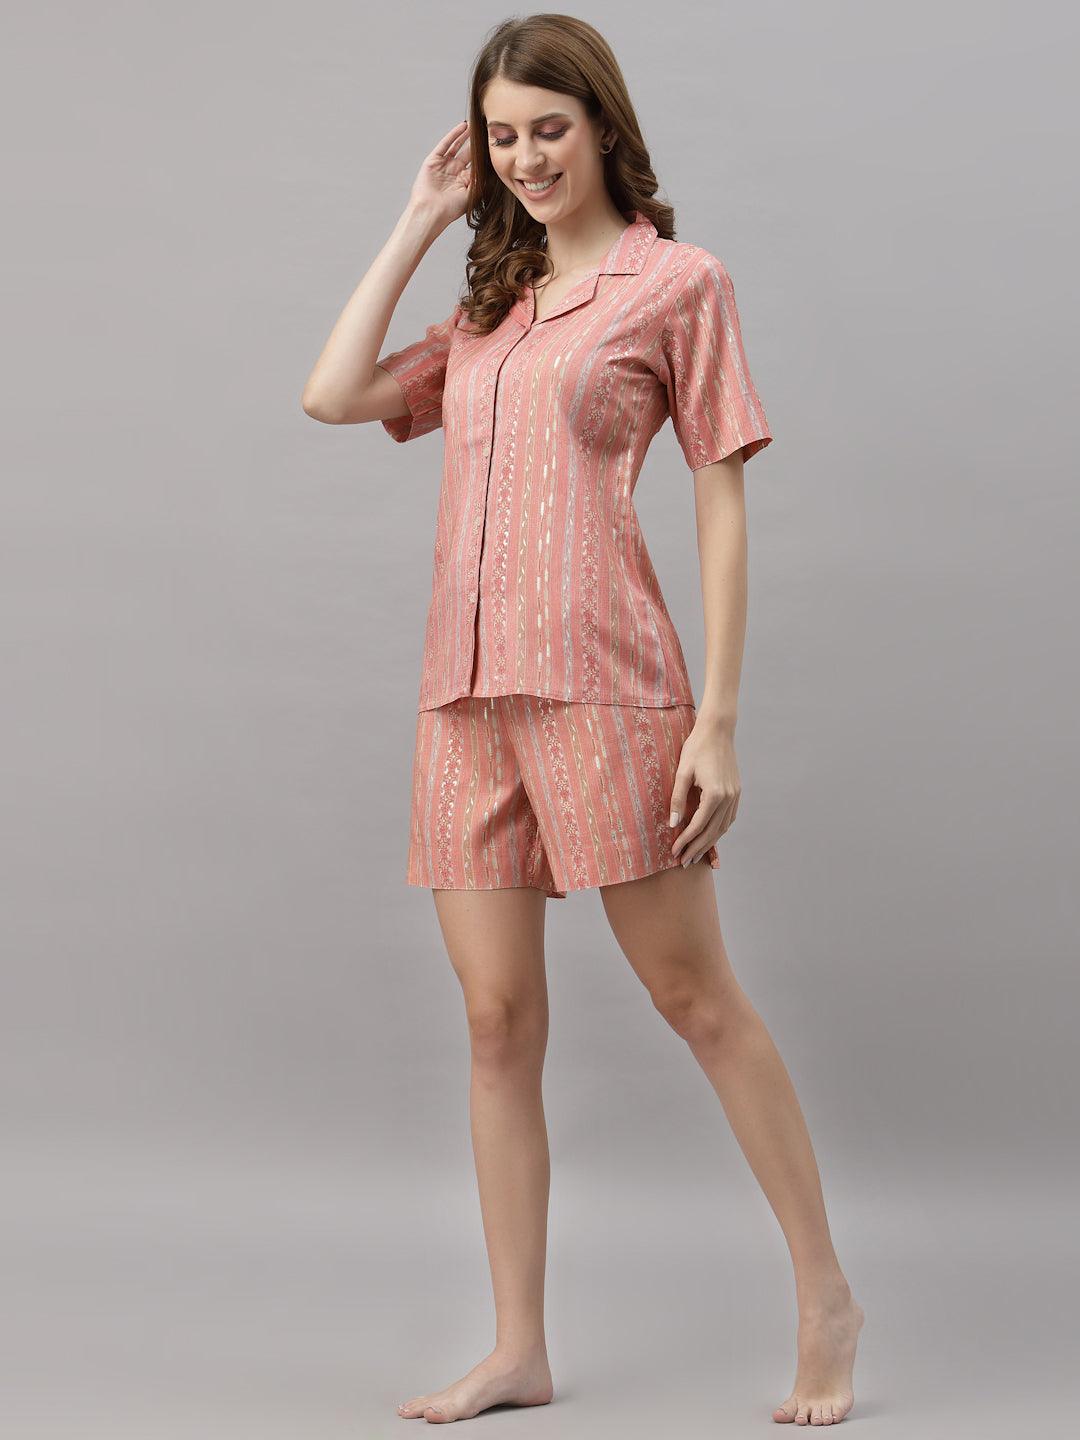 Kiara Pink Shorts Set - Uboric